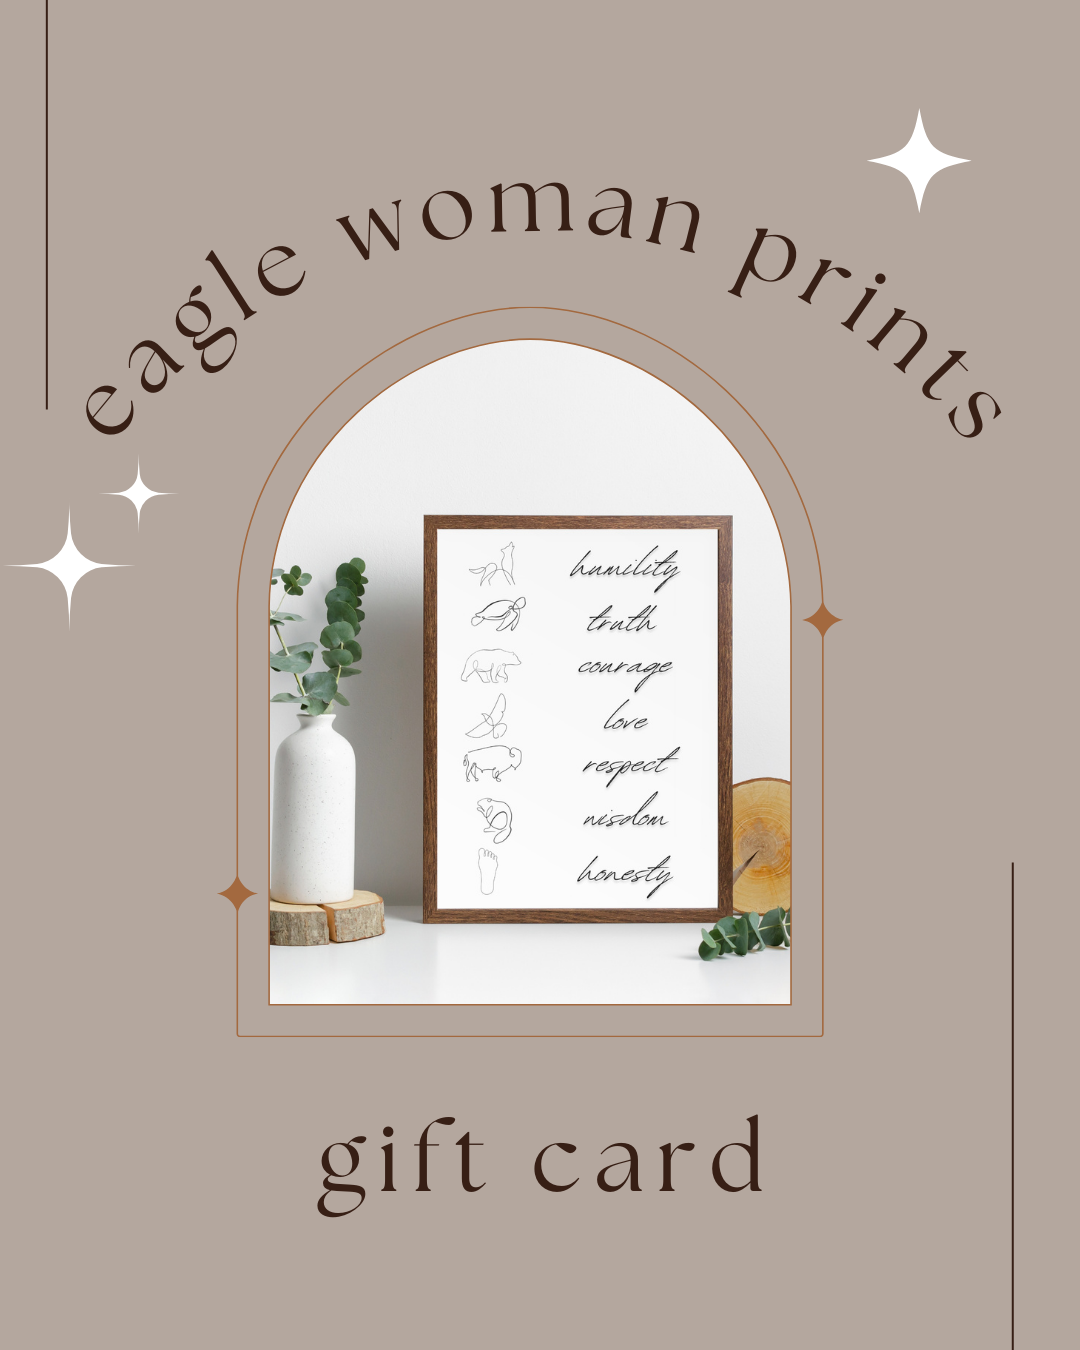 Eagle Woman Prints gift card